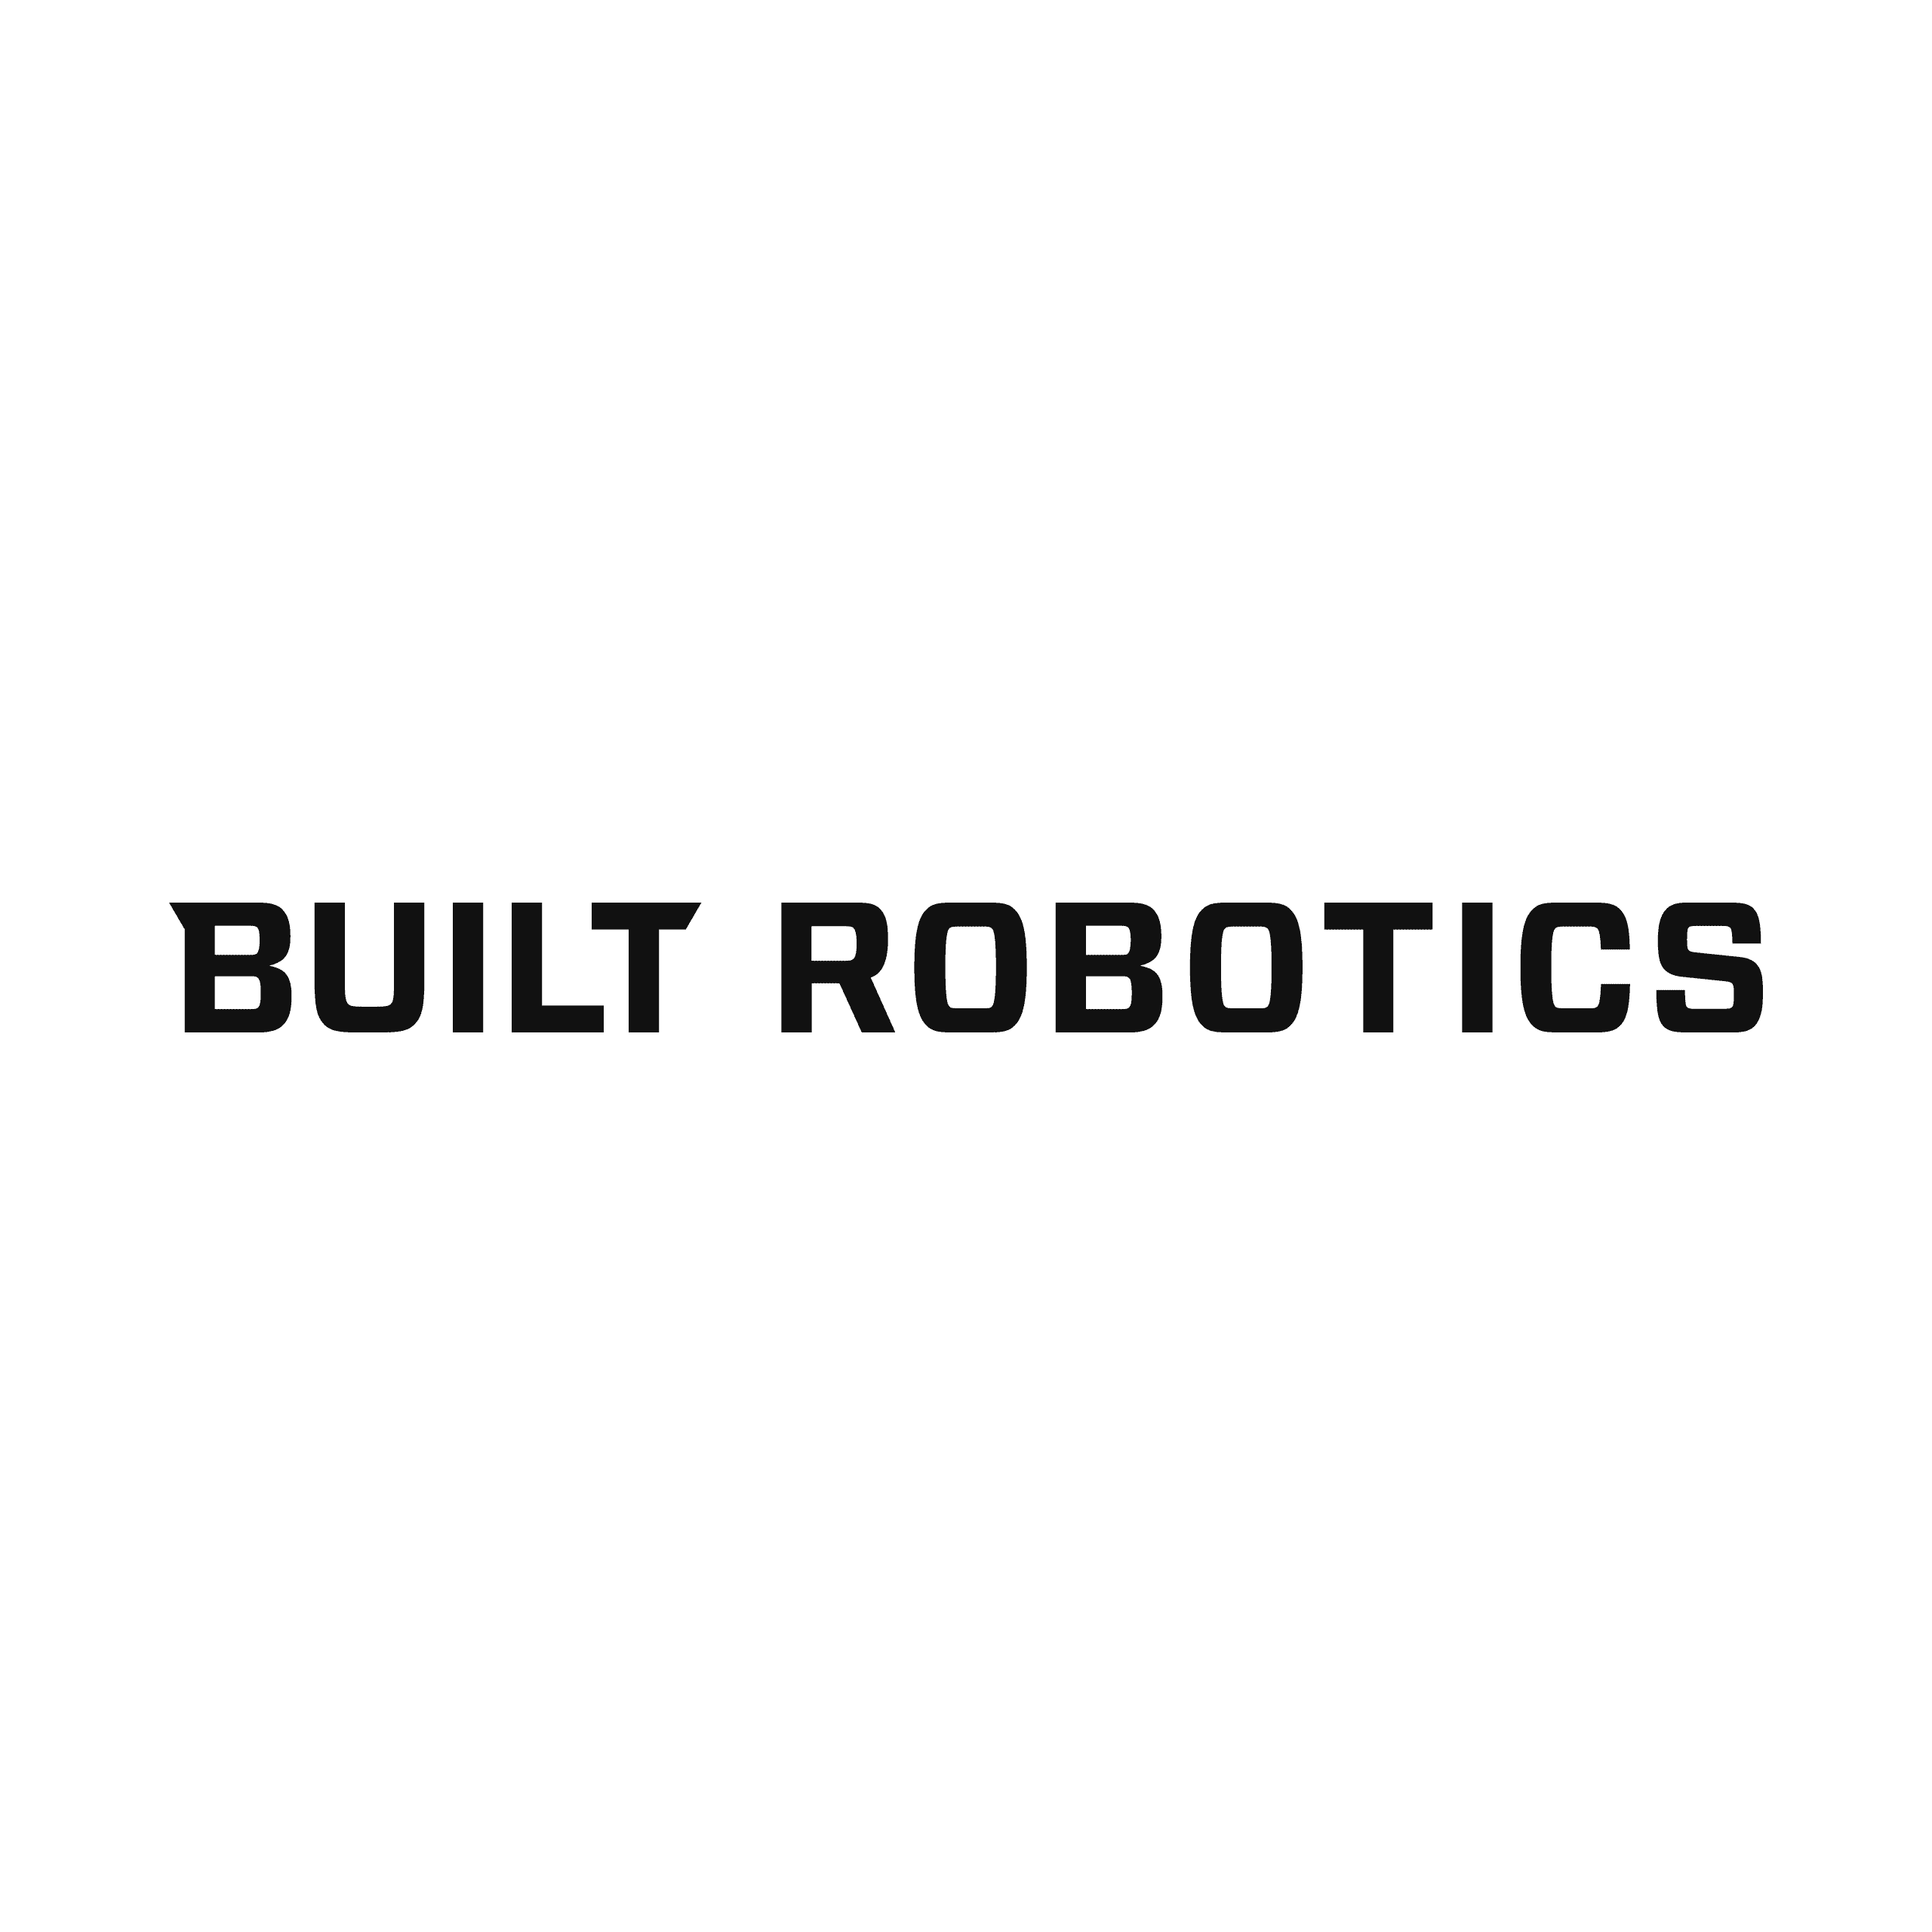 Built robotics logo horizontal